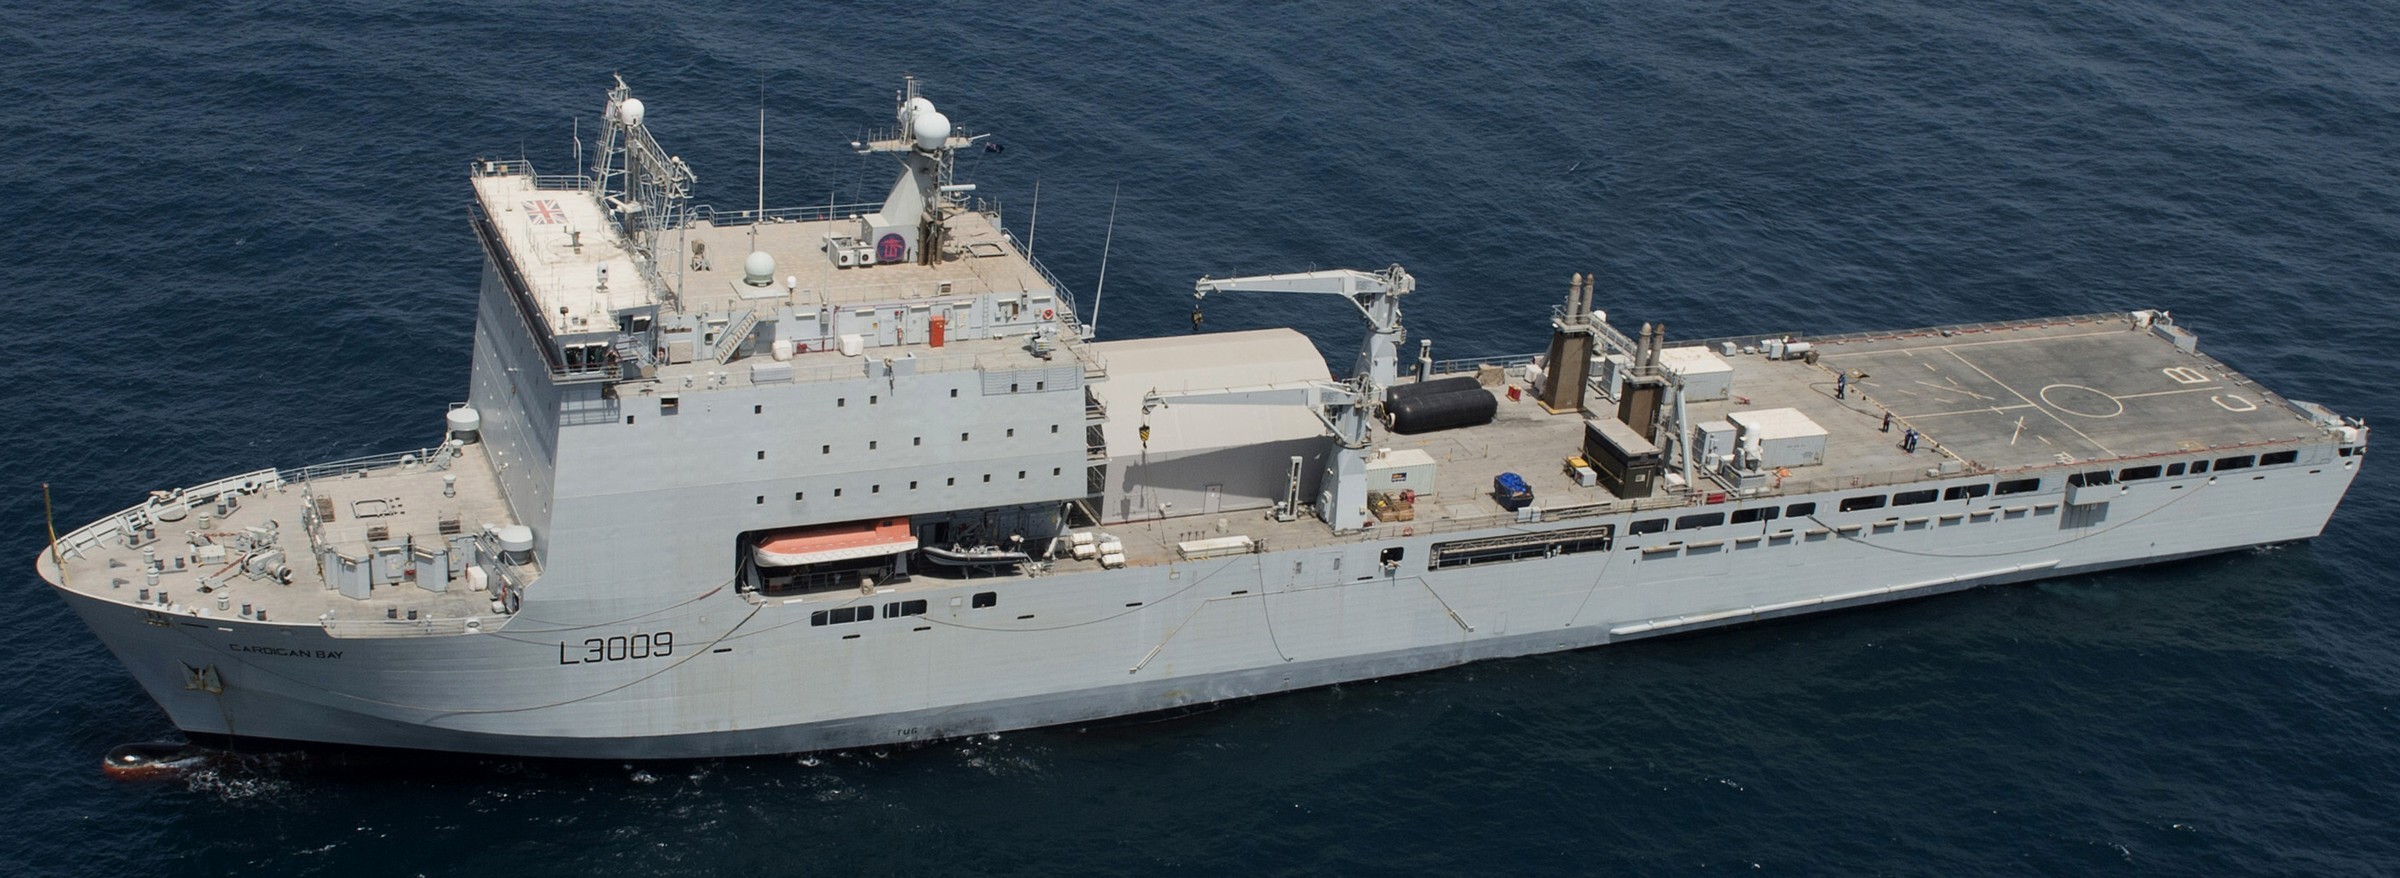 l-3009 rfa cardigan bay dock landing ship lsd royal fleet auxilary navy 12